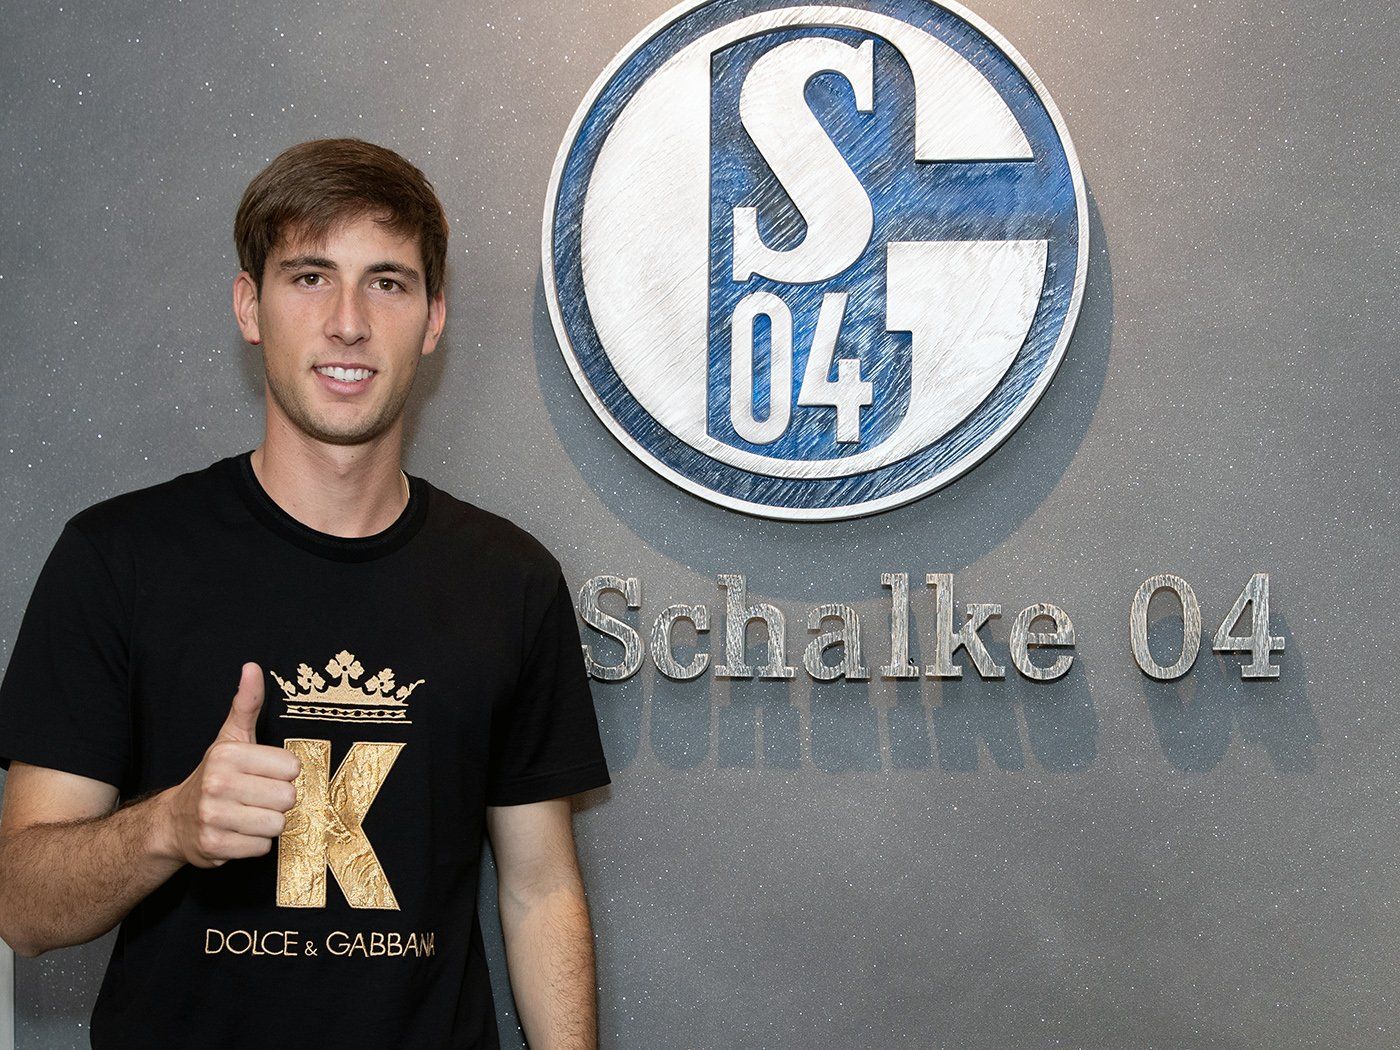 Juan Miranda poses with the shield of the Schalke